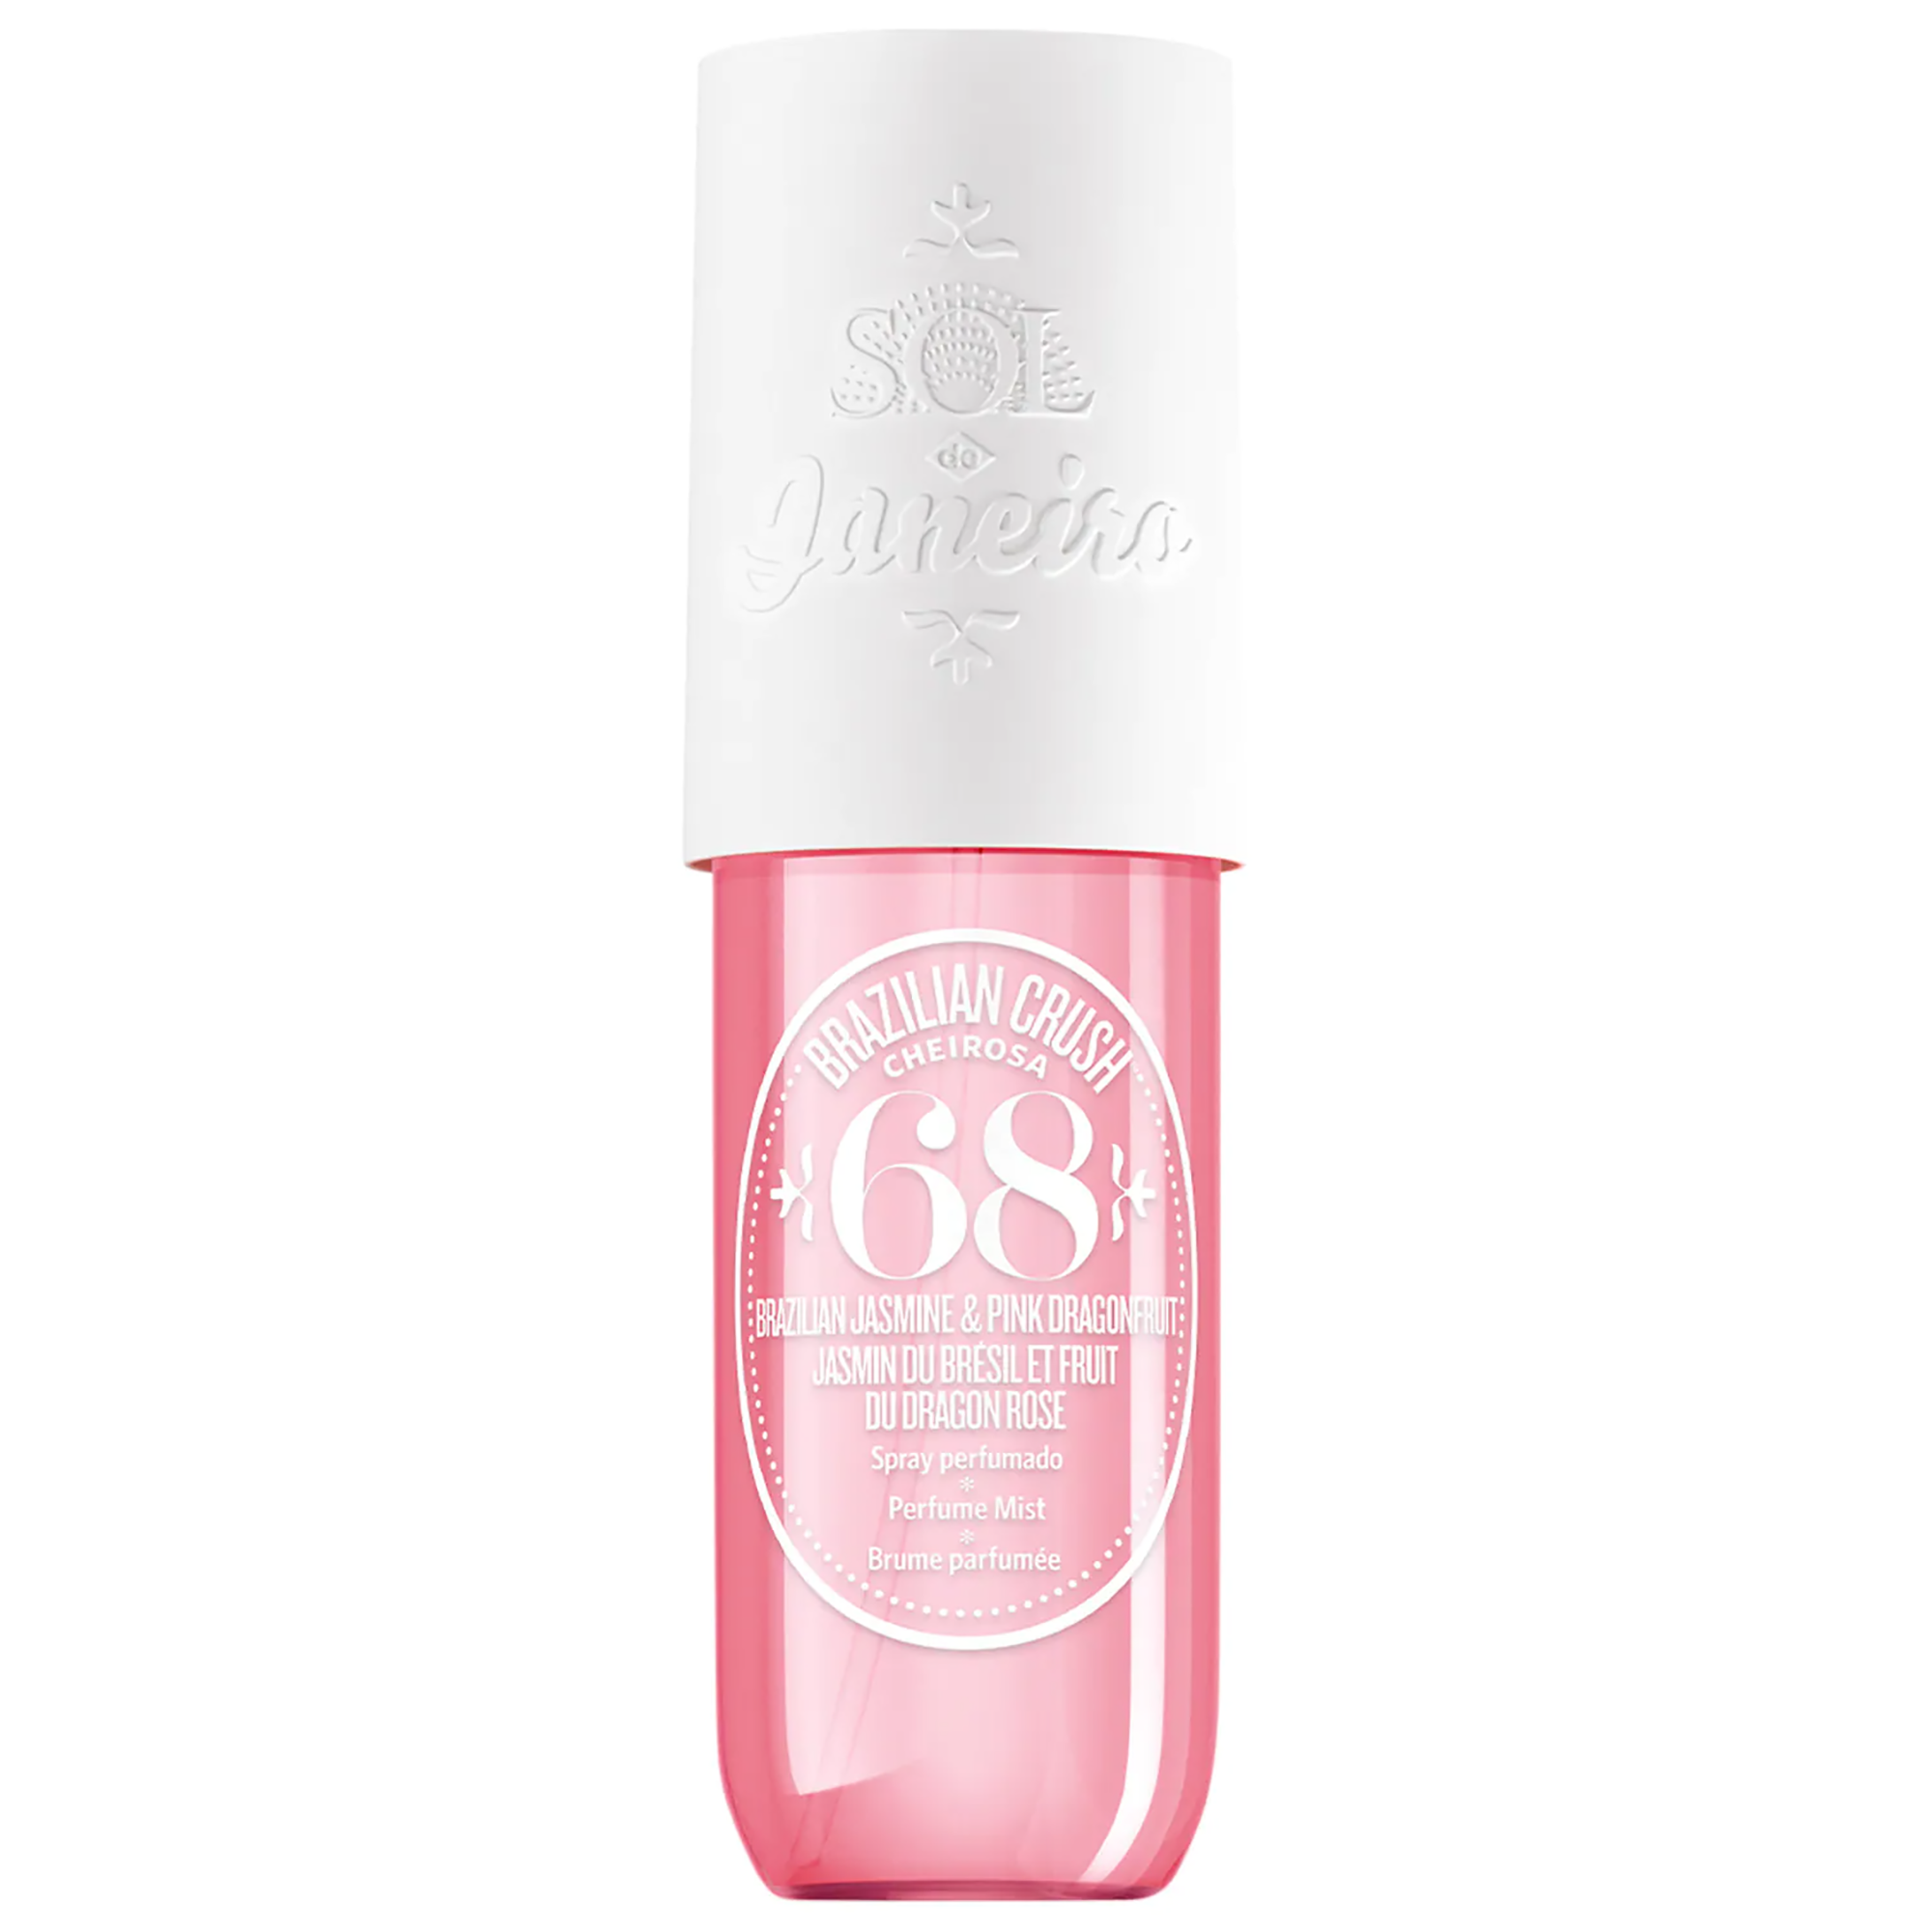 Sol De Janeiro Cheirosa 68 Perfume Mist - 3oz / 3OZ